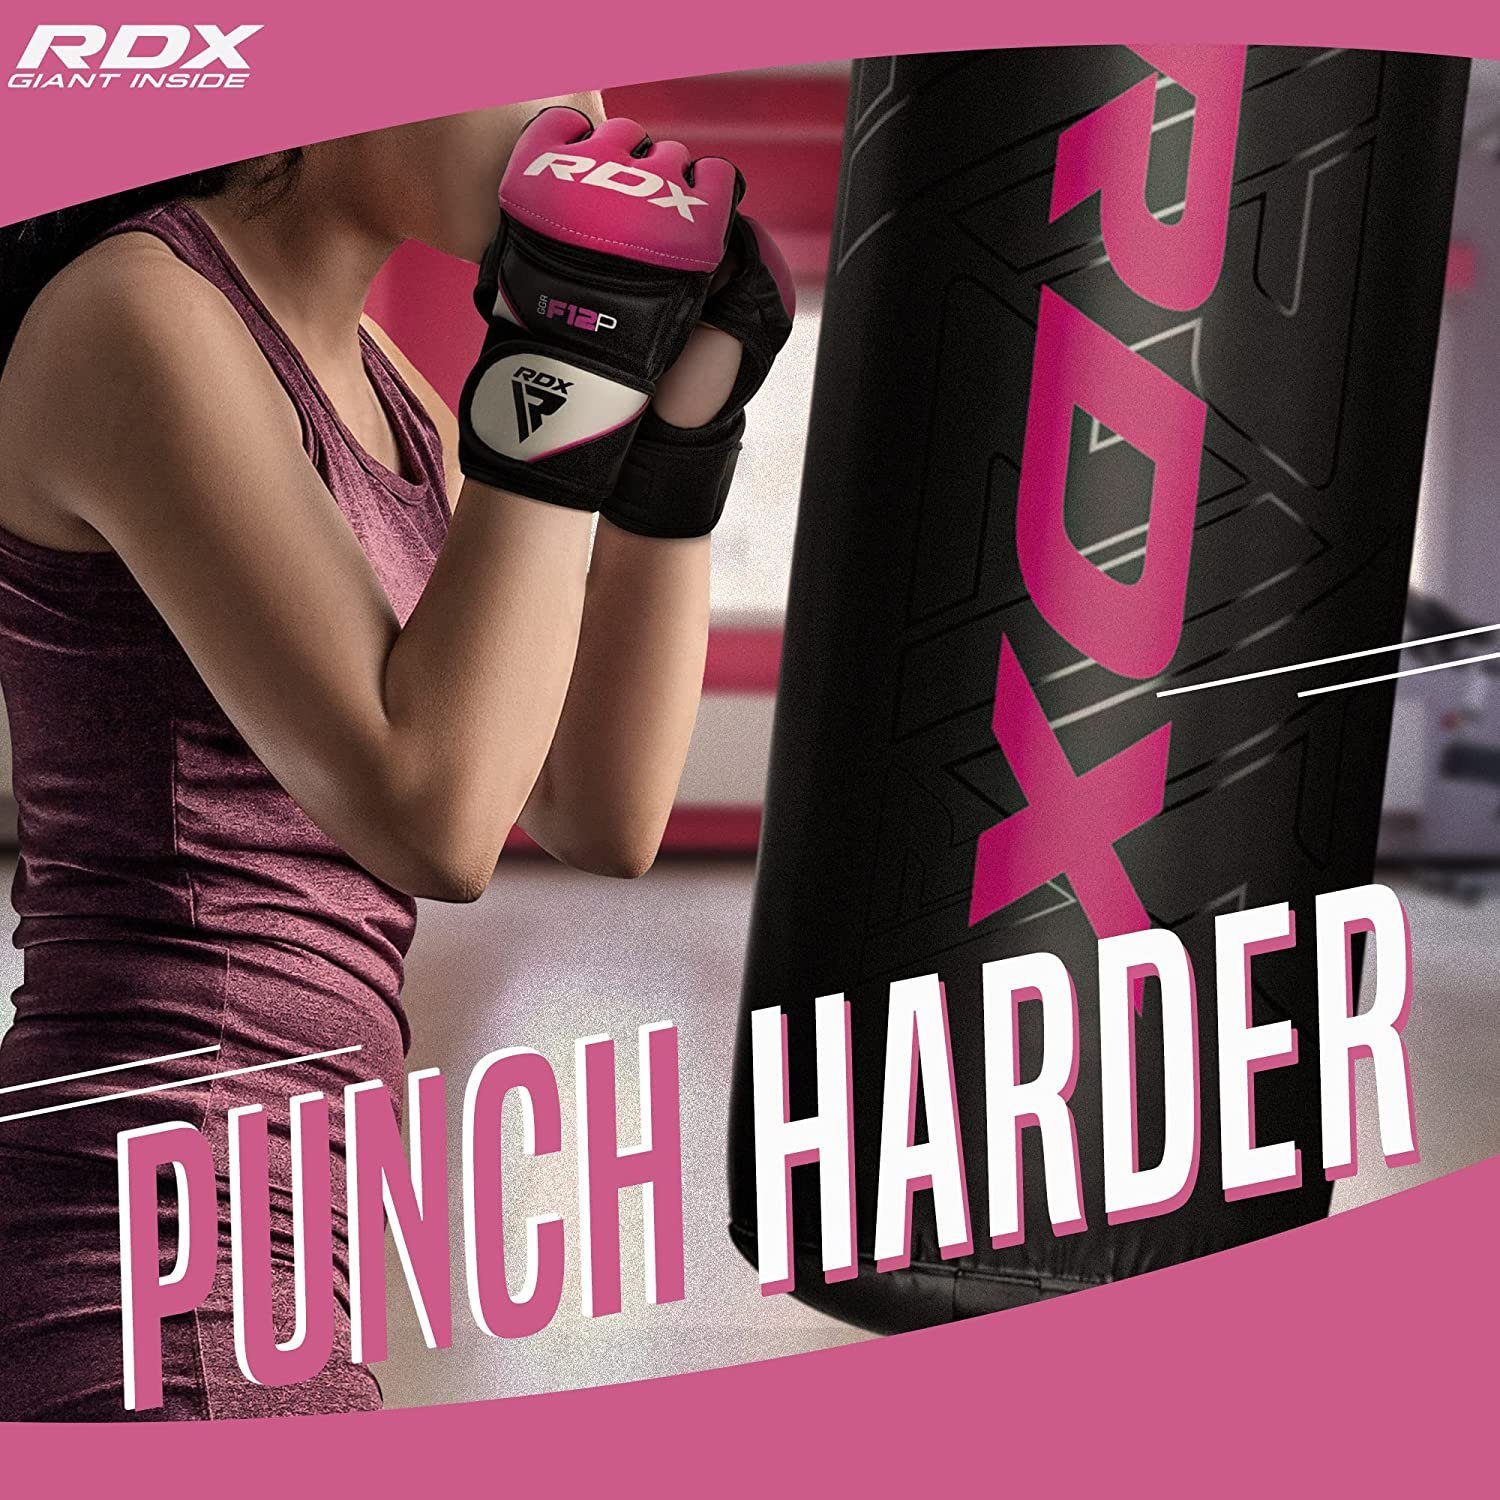 Professionelle Pink Sports Kampfsport MMA RDX Handschuhe, MMA-Handschuhe MMA Boxsack RDX Gloves